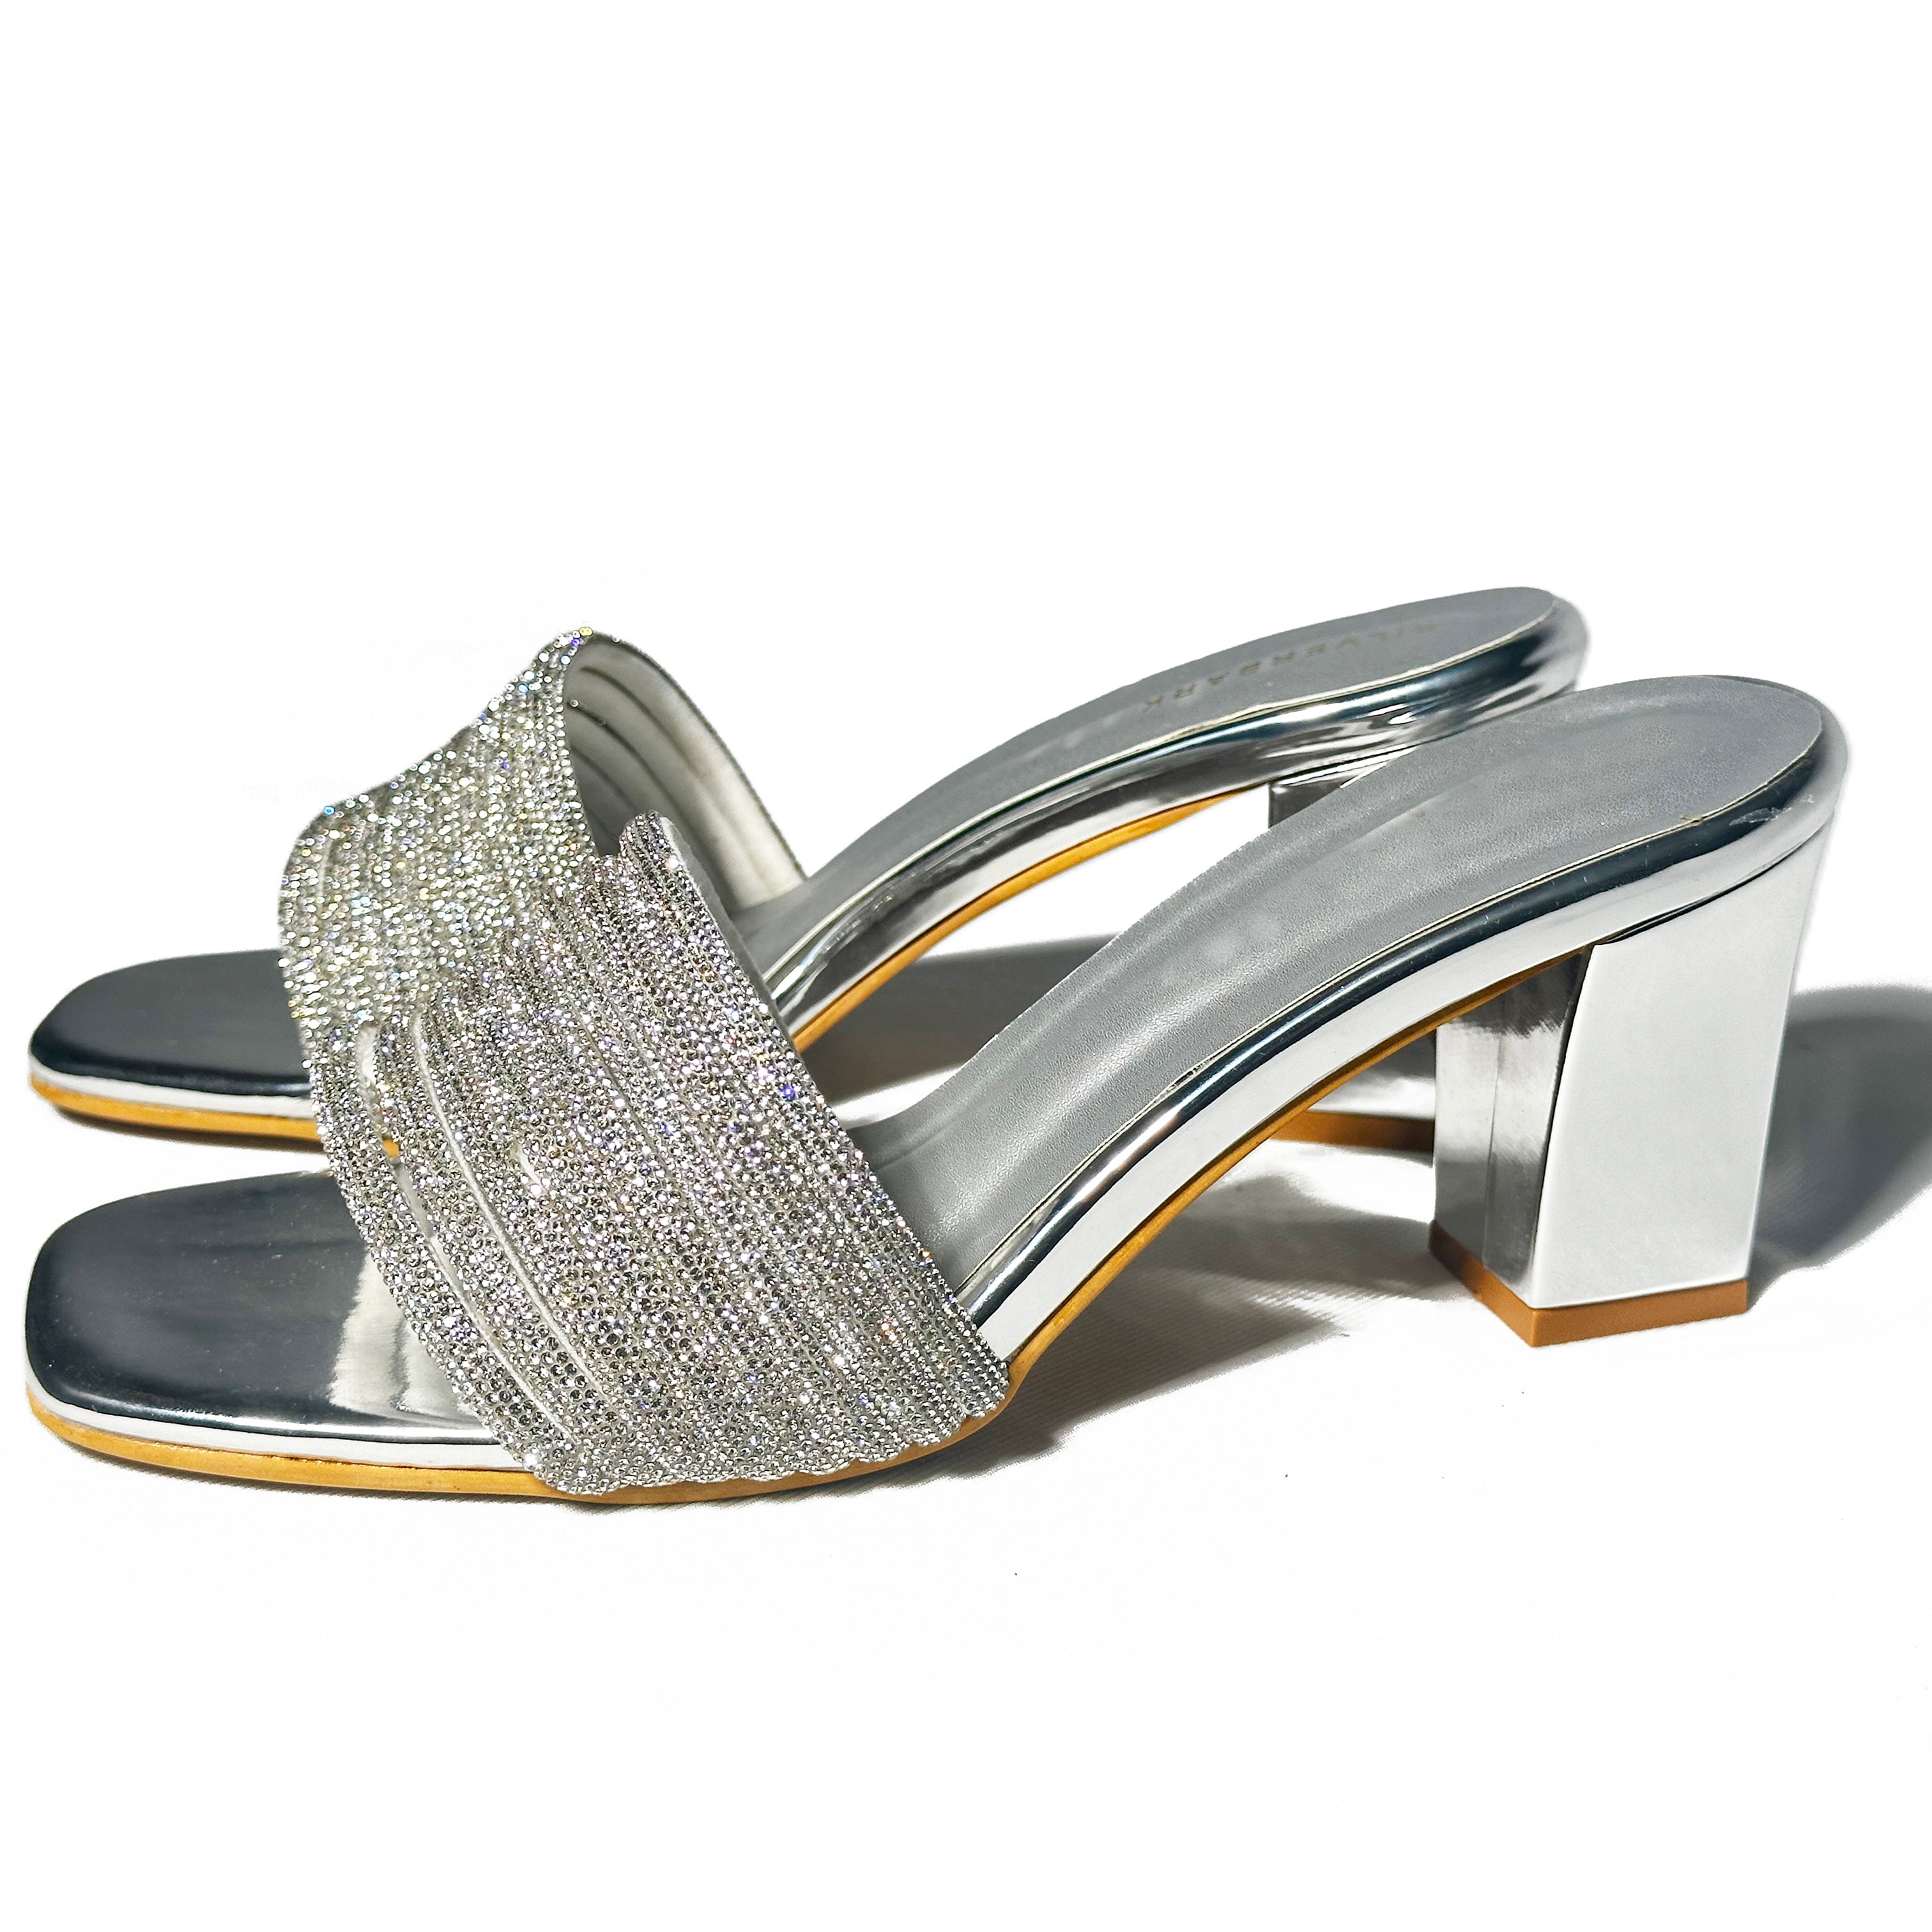 Glamorous block heel sandals in silver rhinestone | ASOS